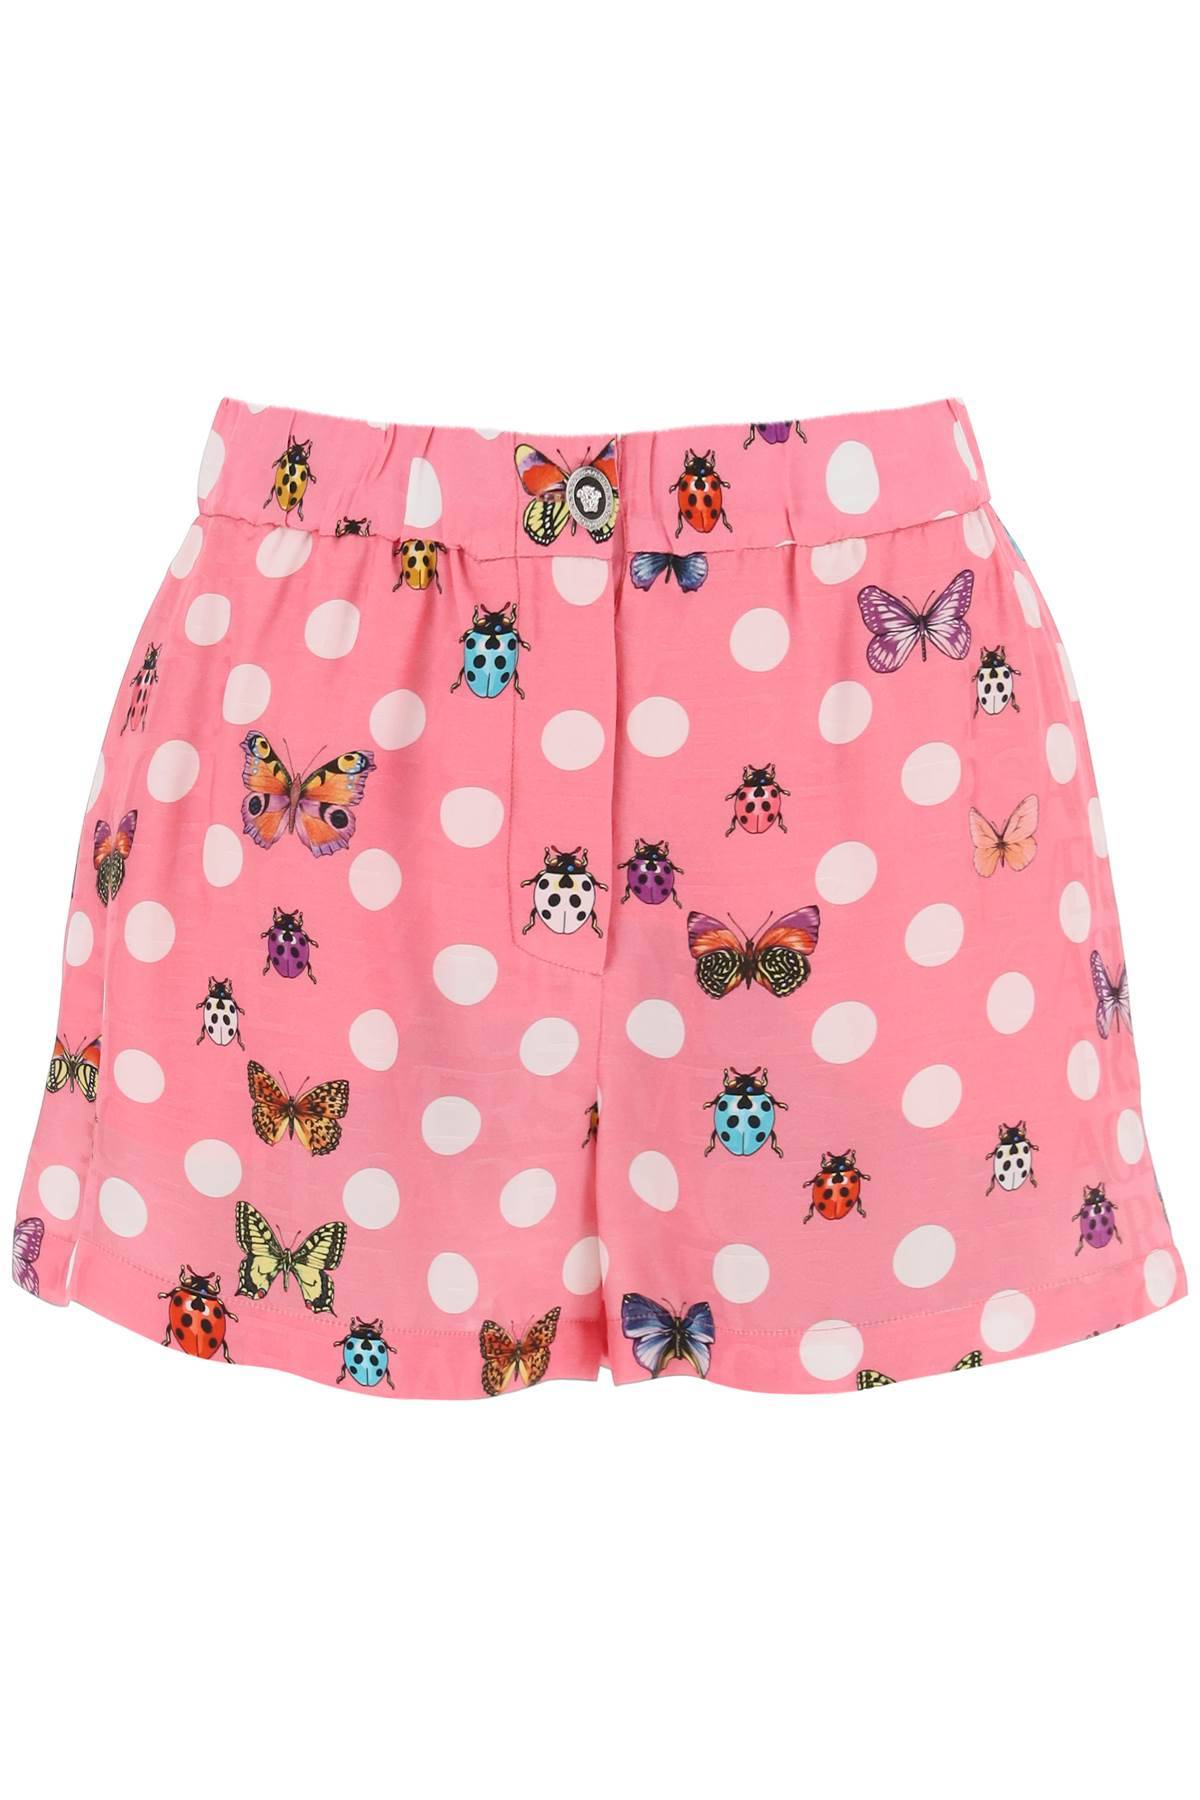 Versace VERSACE butterflies & ladybugs polka dot shorts